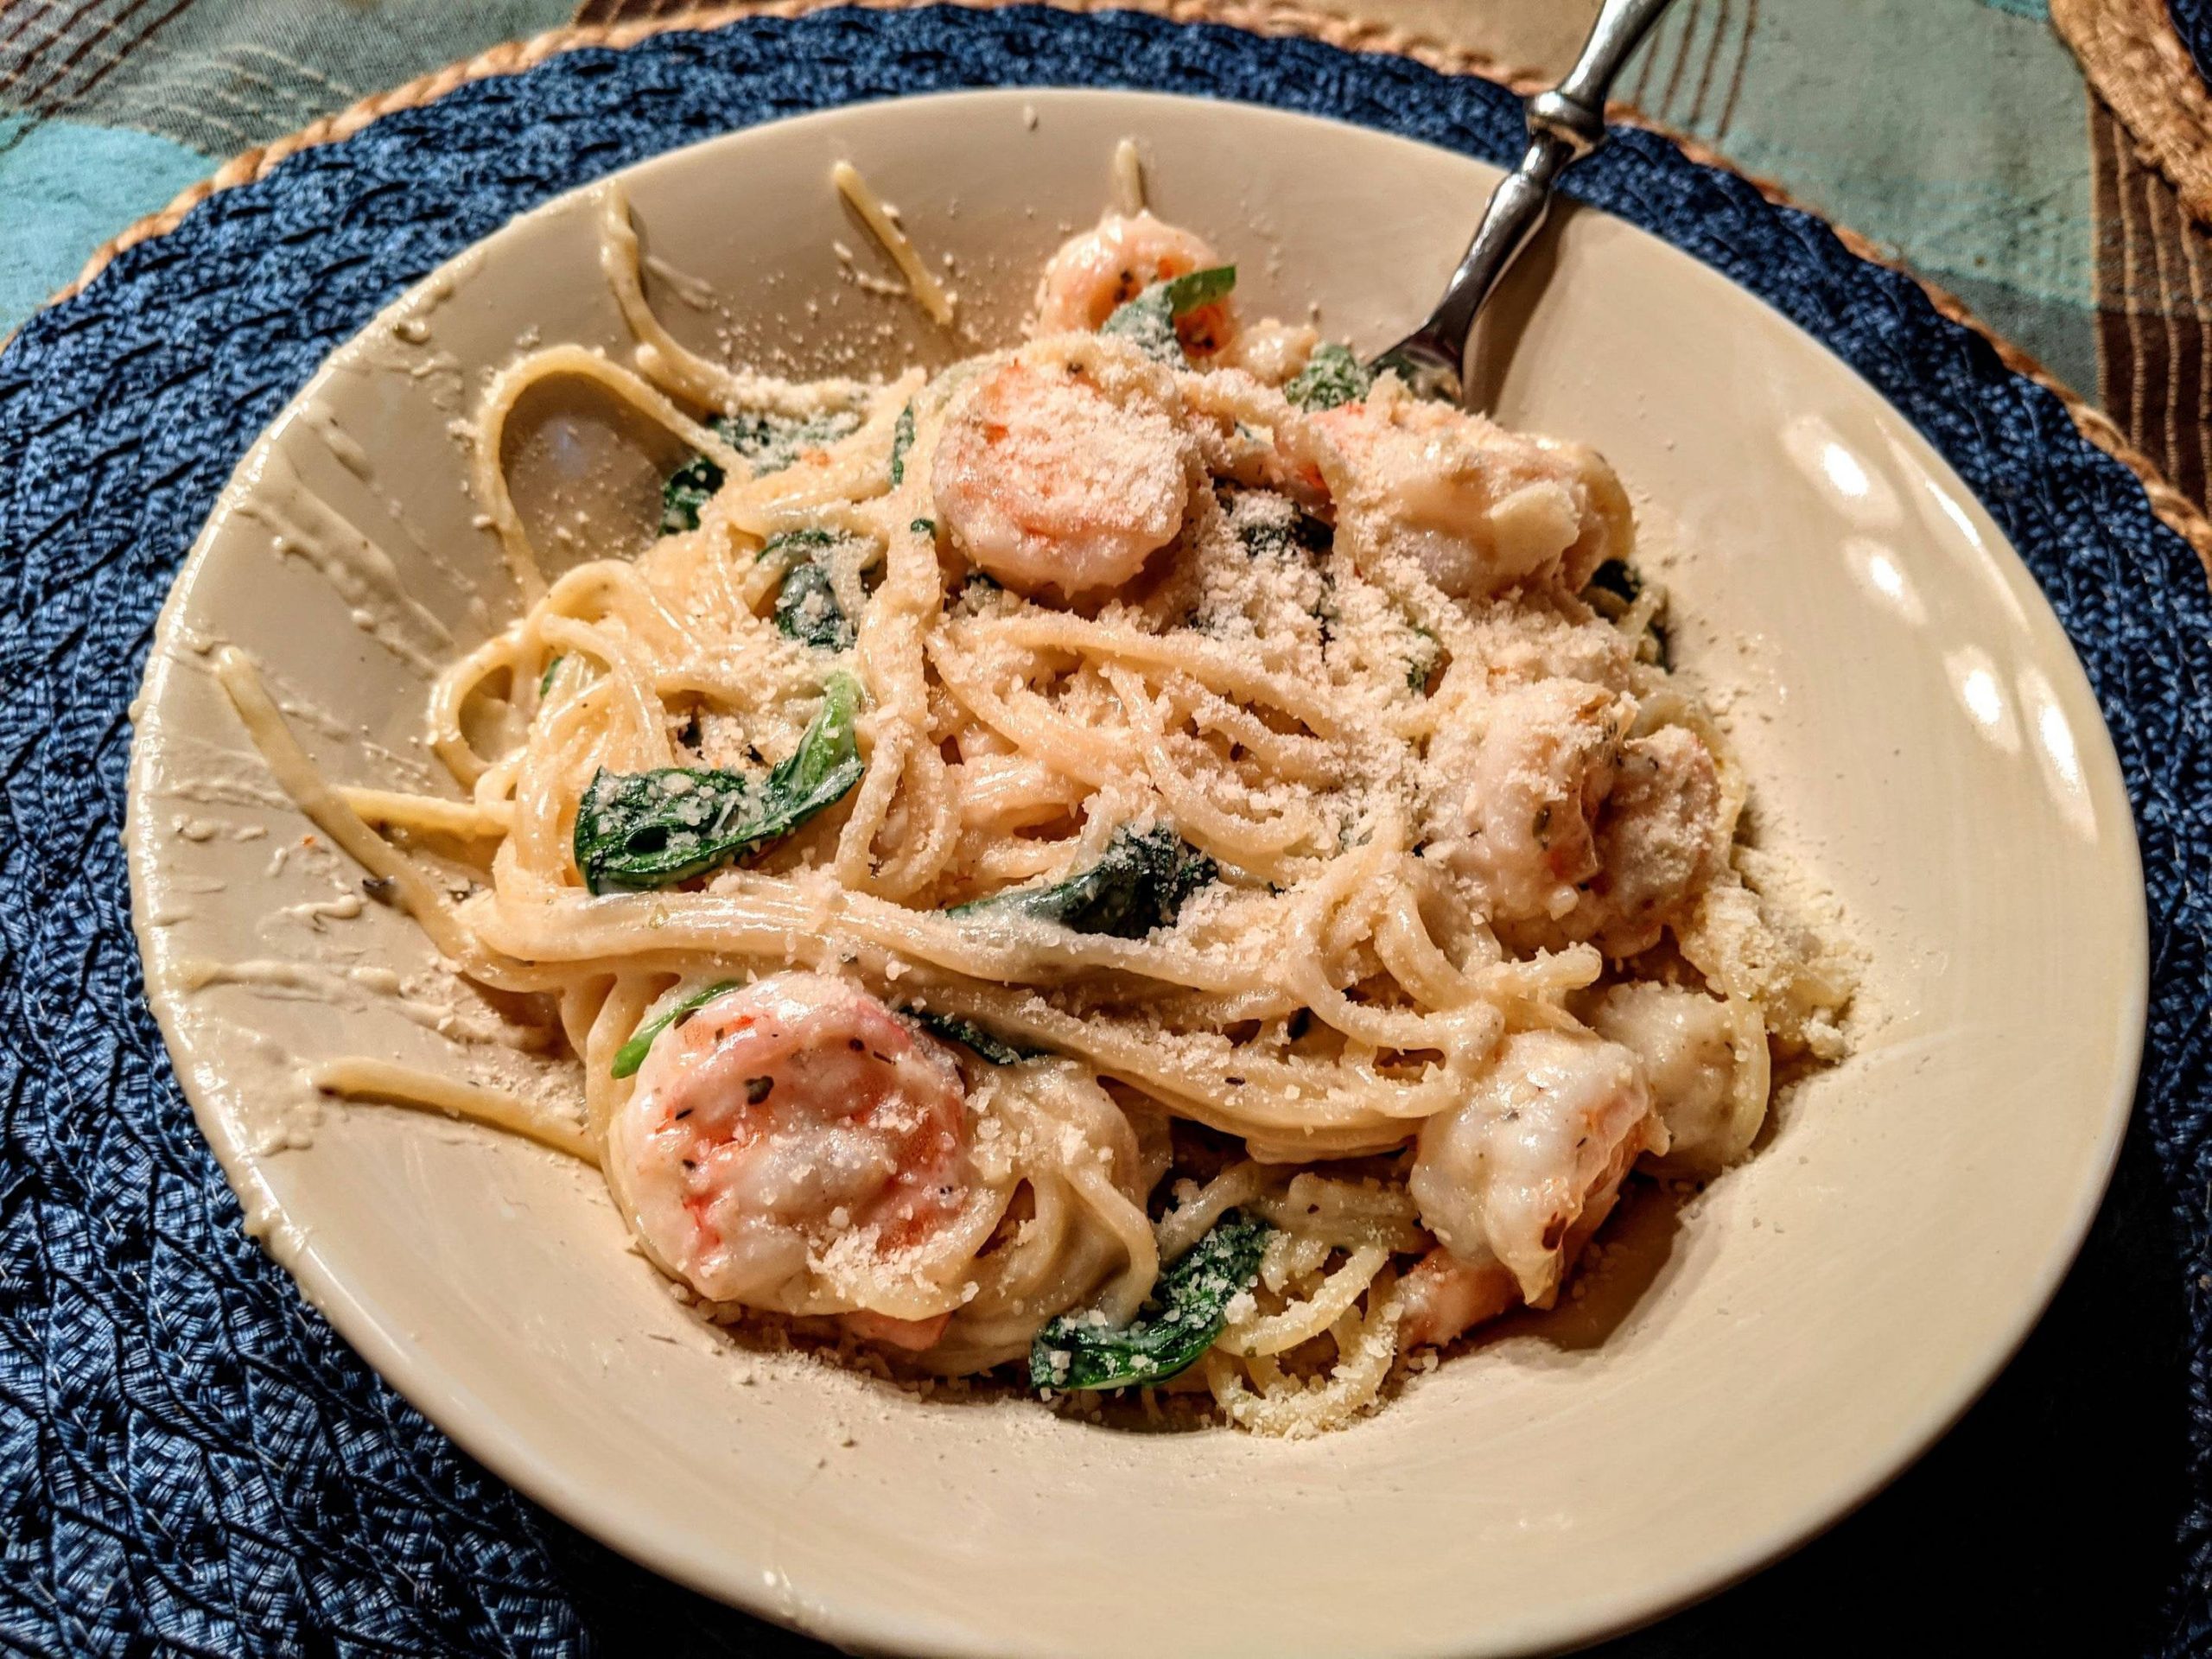 Shrimp and bay scallop pasta in a garlic and white wine cream sauce